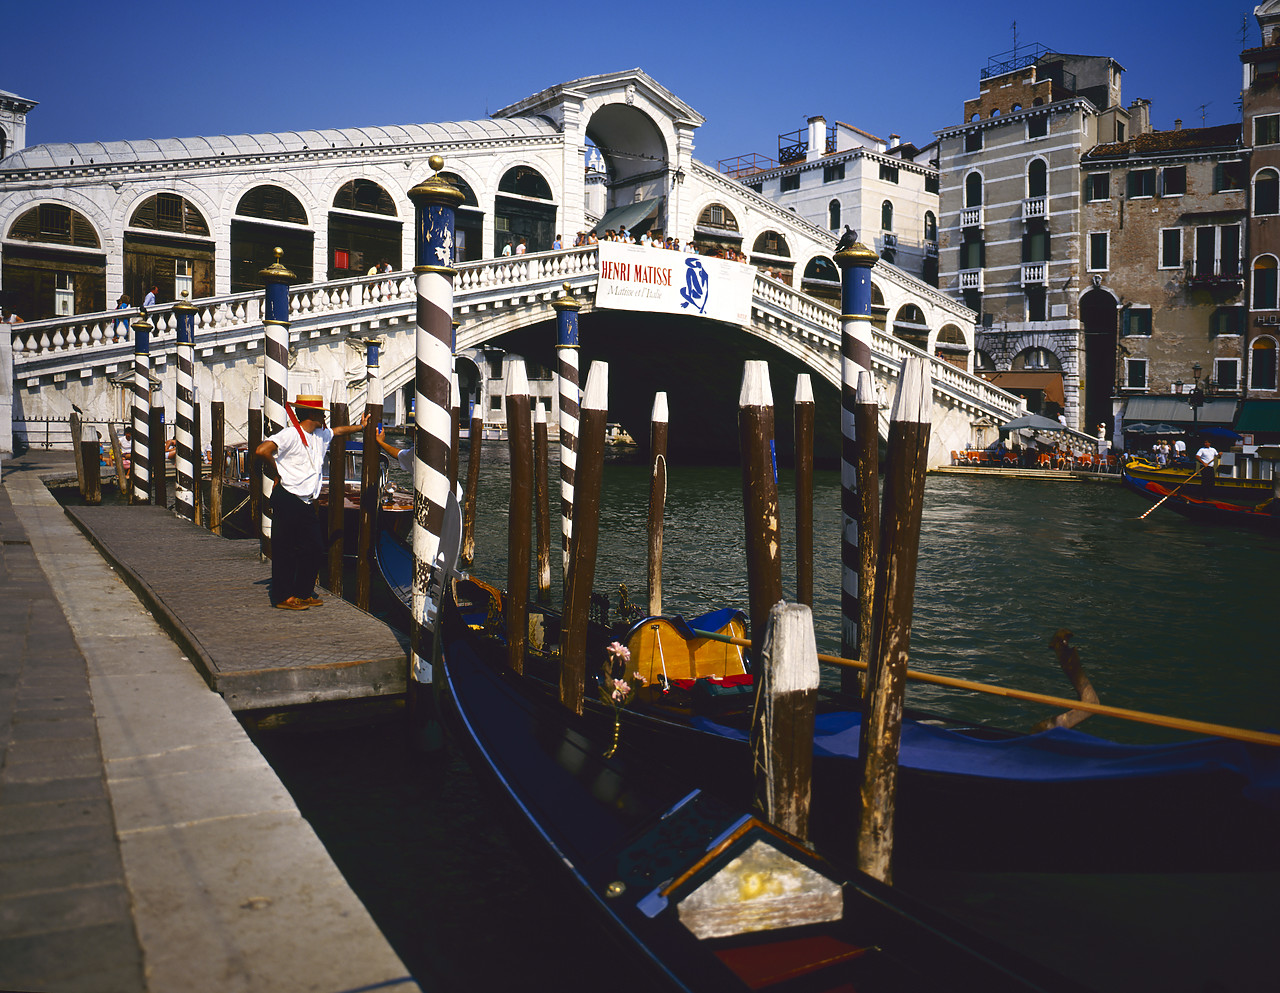 #871026-1 - Rialto Bridge, Venice, Italy